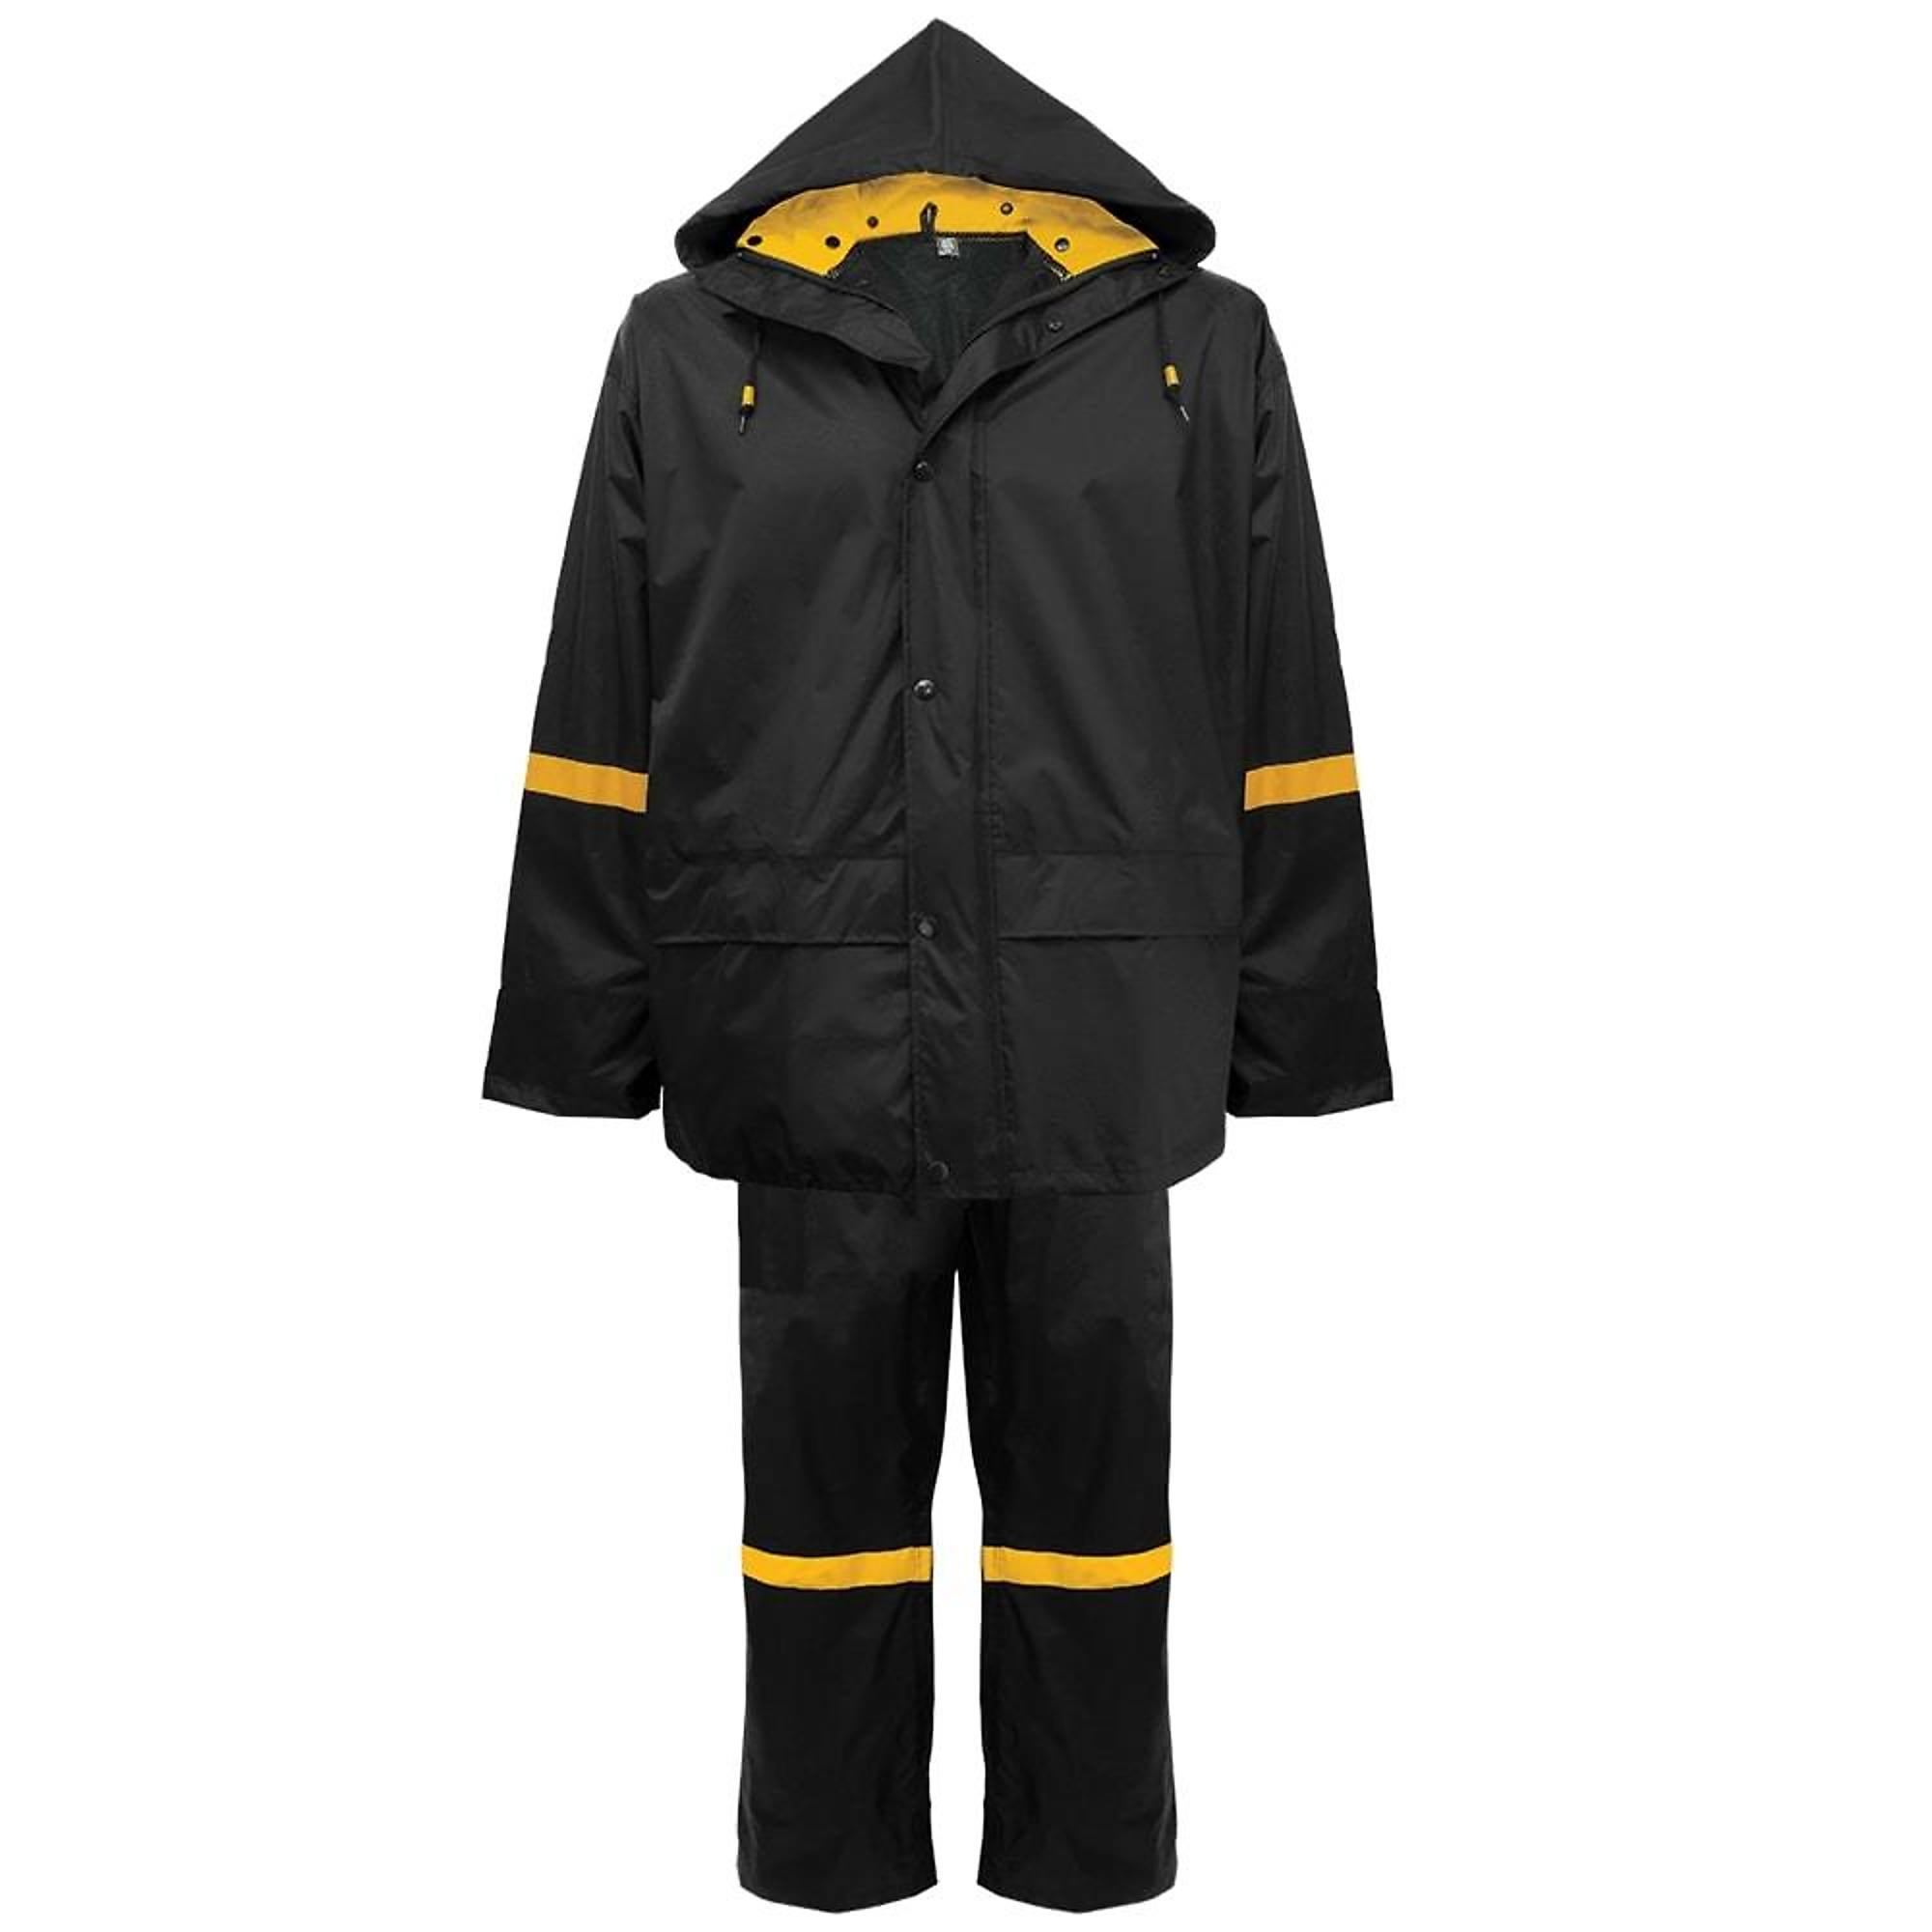 FrogWear, Black, PVC Coated, Nylon Three-Piece Rain Suit, Size L, Color Black/Yellow, Model R6400-L